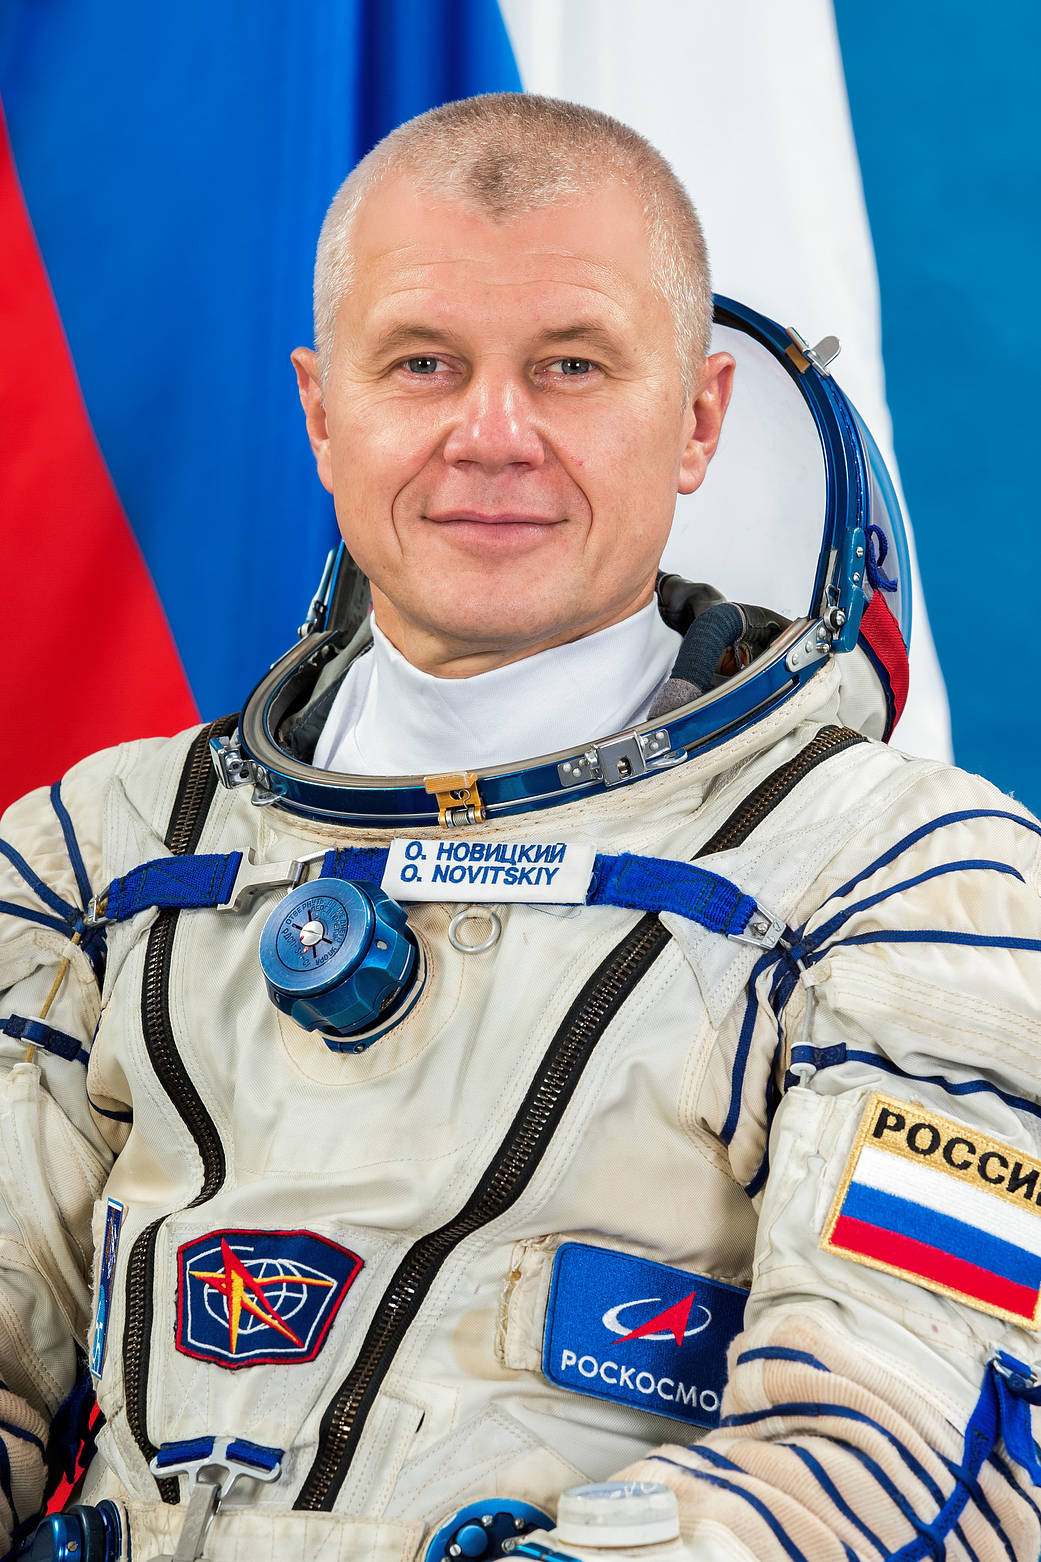 Expedition 65 prime crew member Oleg Novitskiy